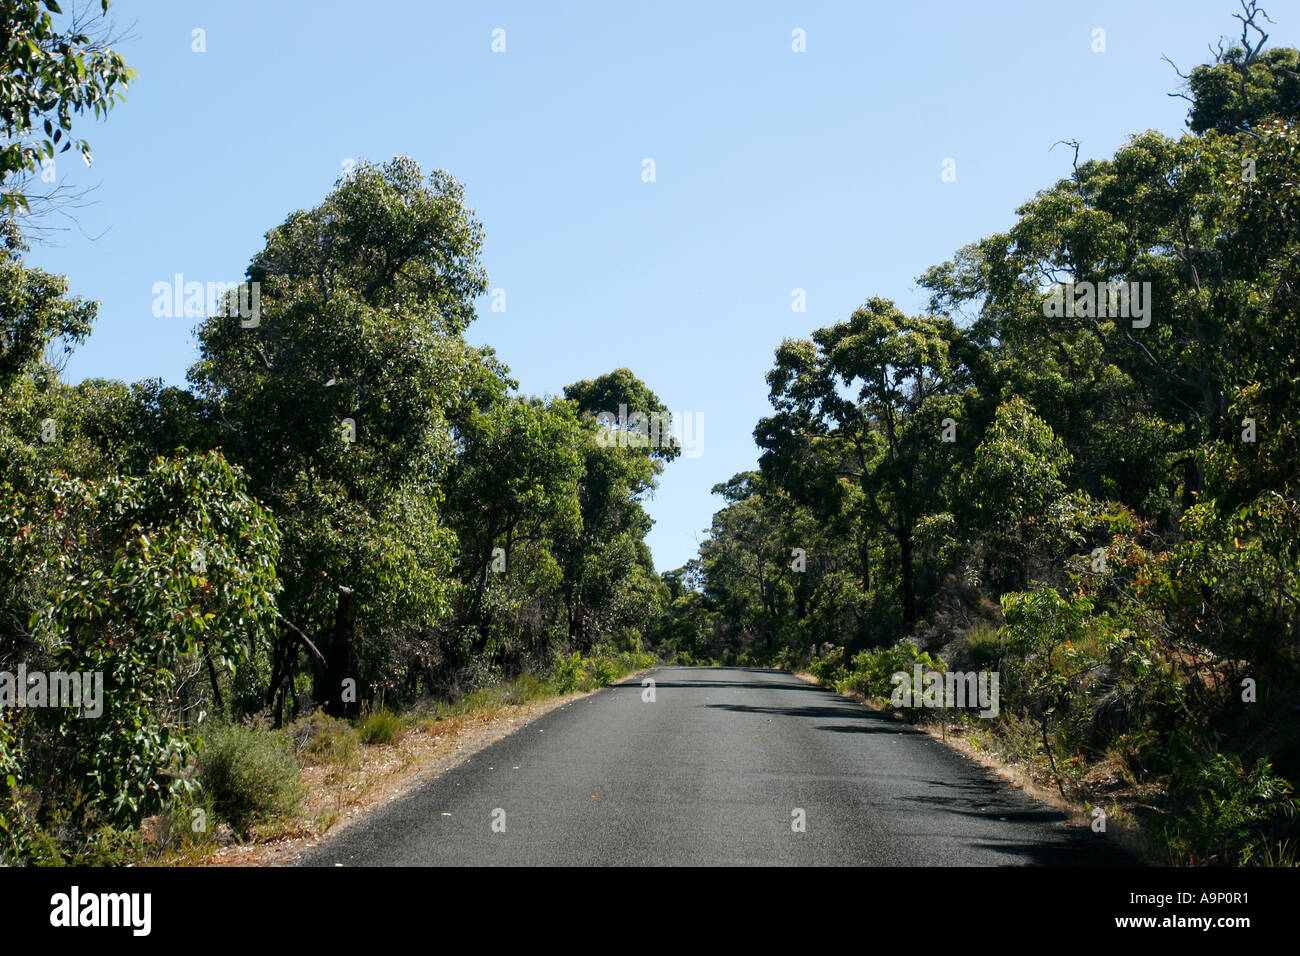 The tropical bushland around Bussleton western Australia. Stock Photo